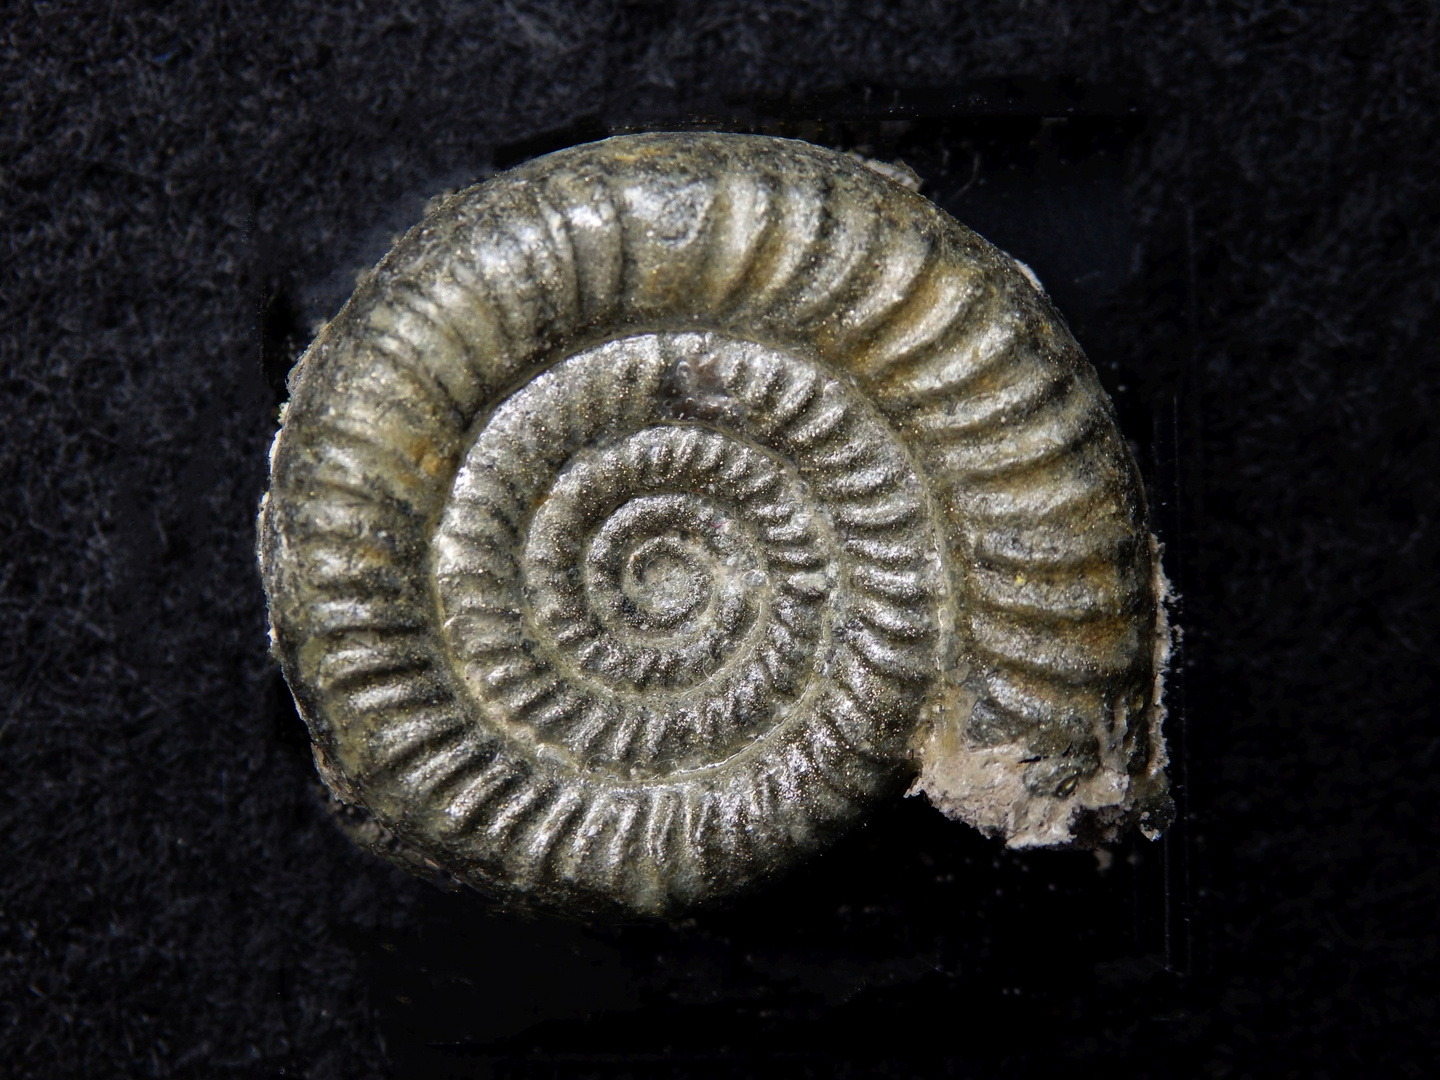 Pyritisierter Ammonit aus der Jurazeit - Dumortieria insignisimilis